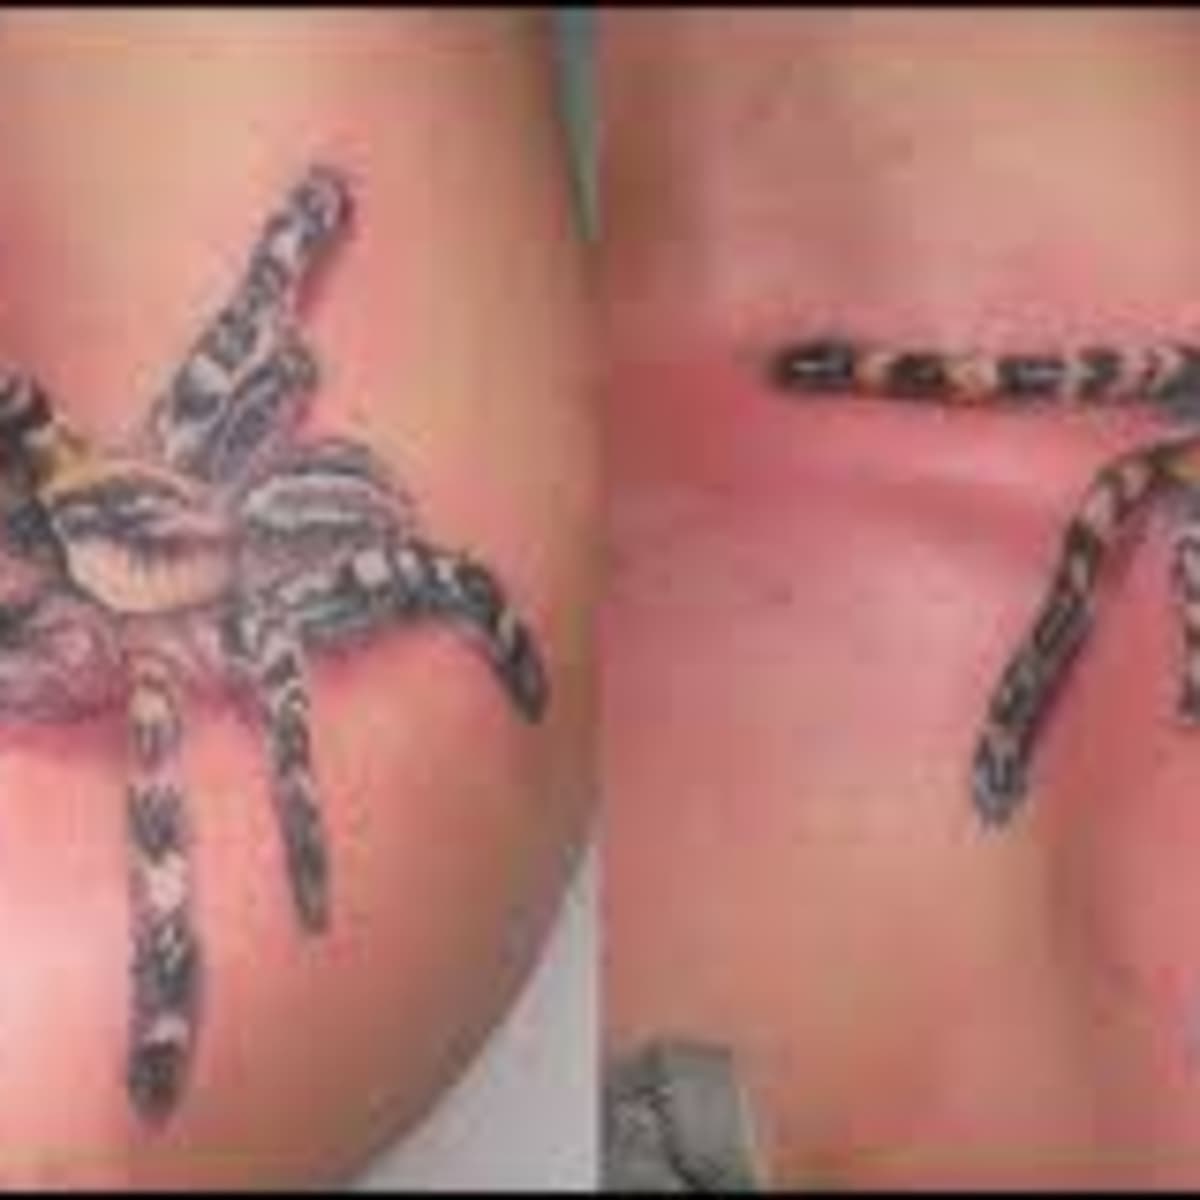 Tattoo uploaded by rcallejatattoo  Super cool looking spider 8 ball tattoo  HanShinko spider 8ball blackwork  Tattoodo